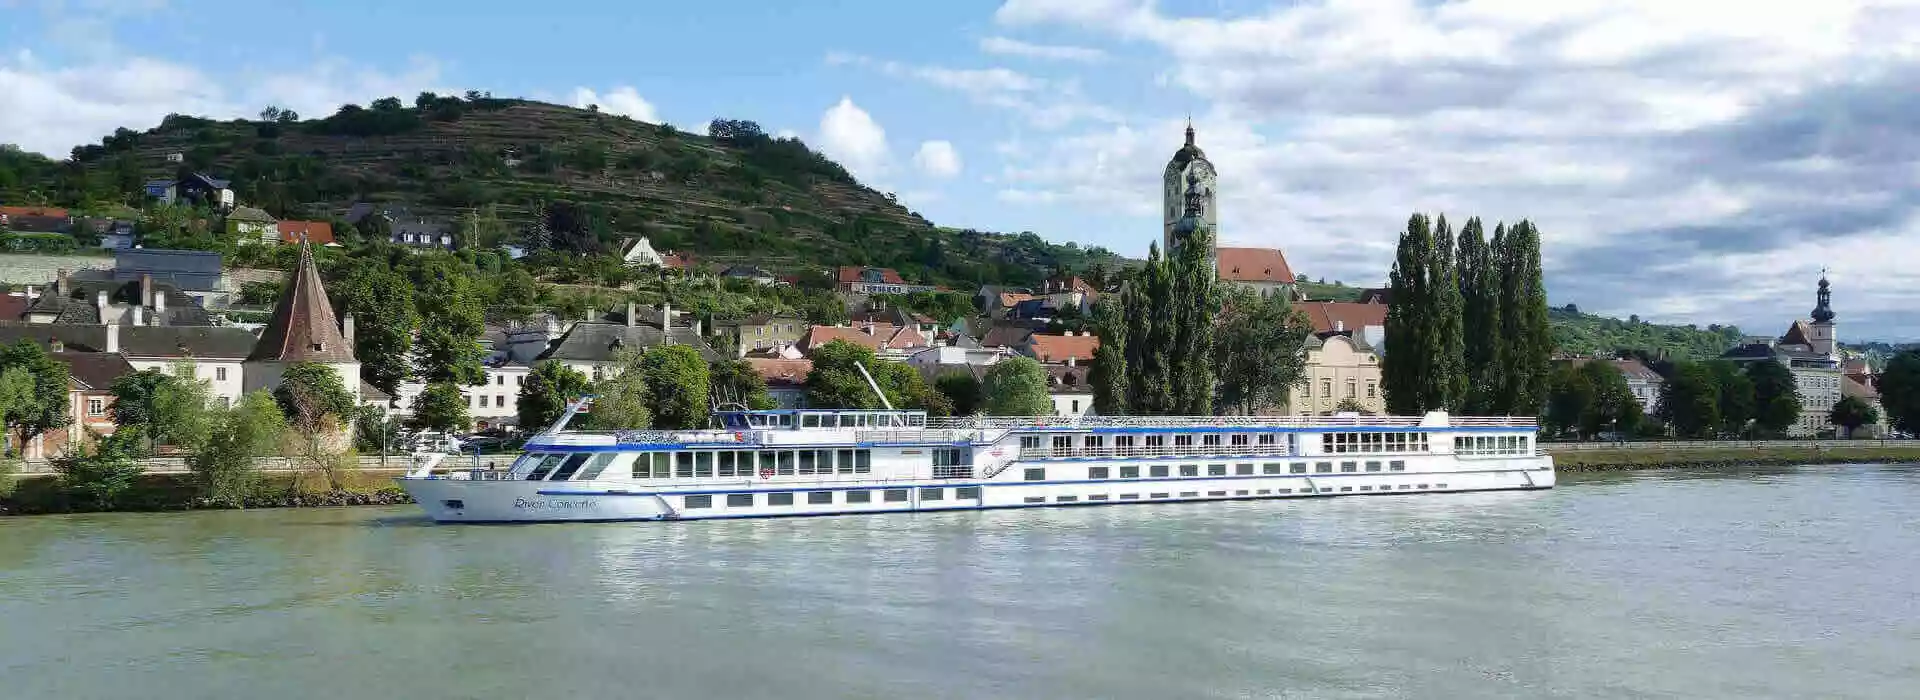 River Cruise Ship Standing in Danube River